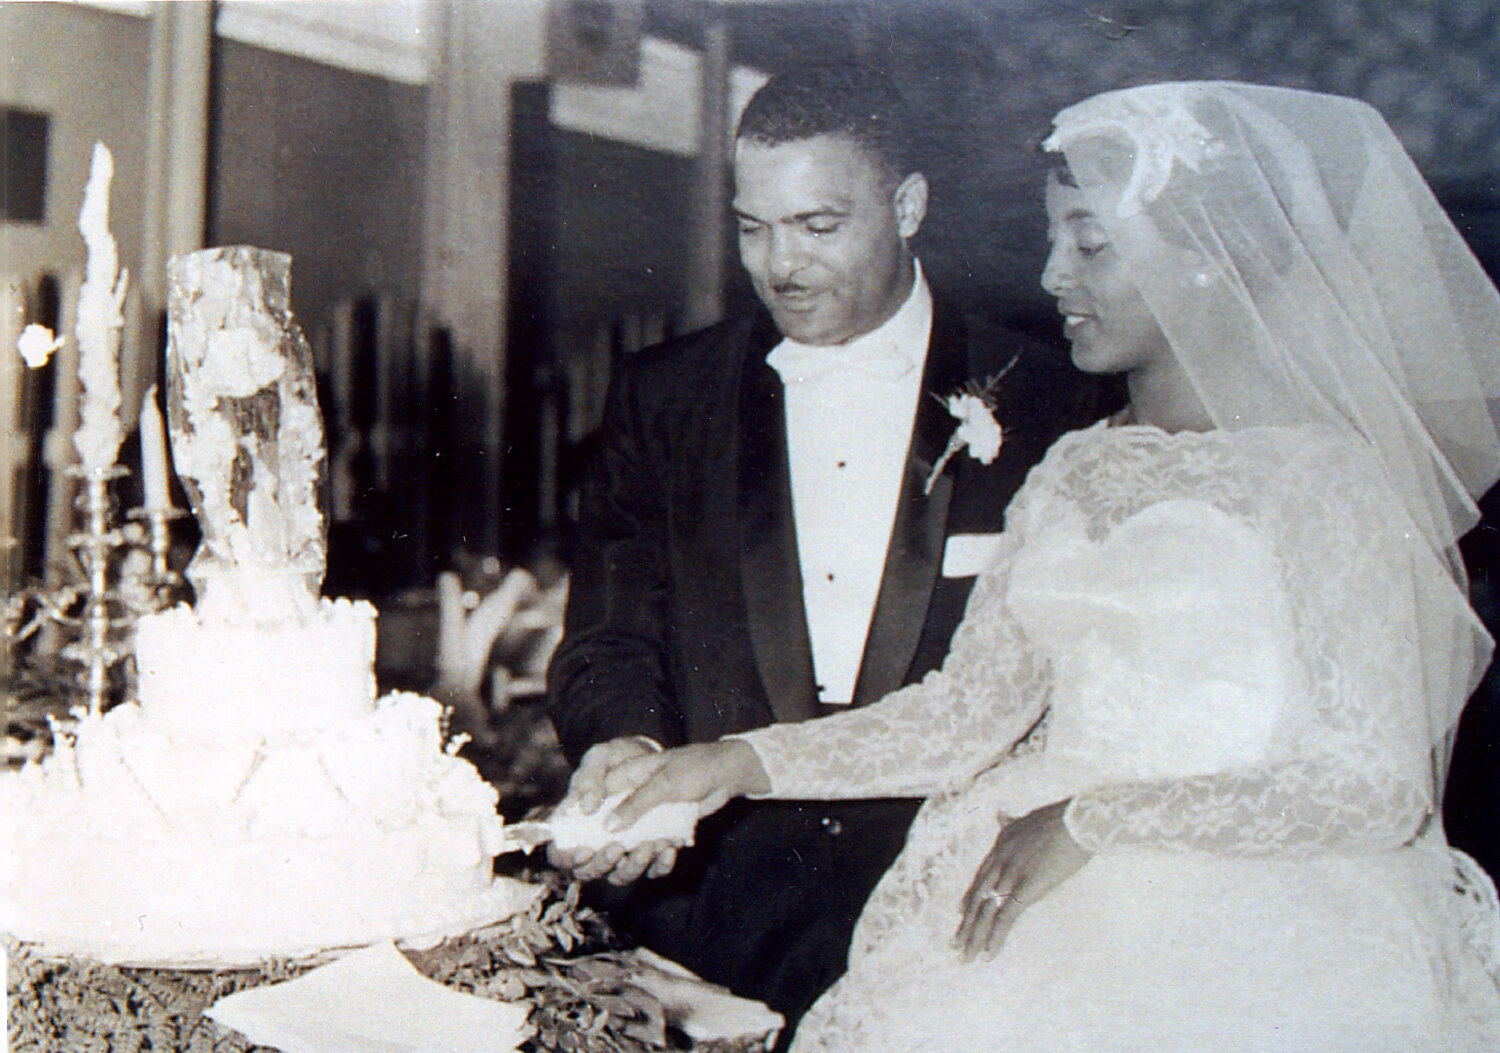  Mrs. Sarah Keys Evans on her wedding day in 1958.  Photo courtesy of Mrs. Sarah Keys Evans  